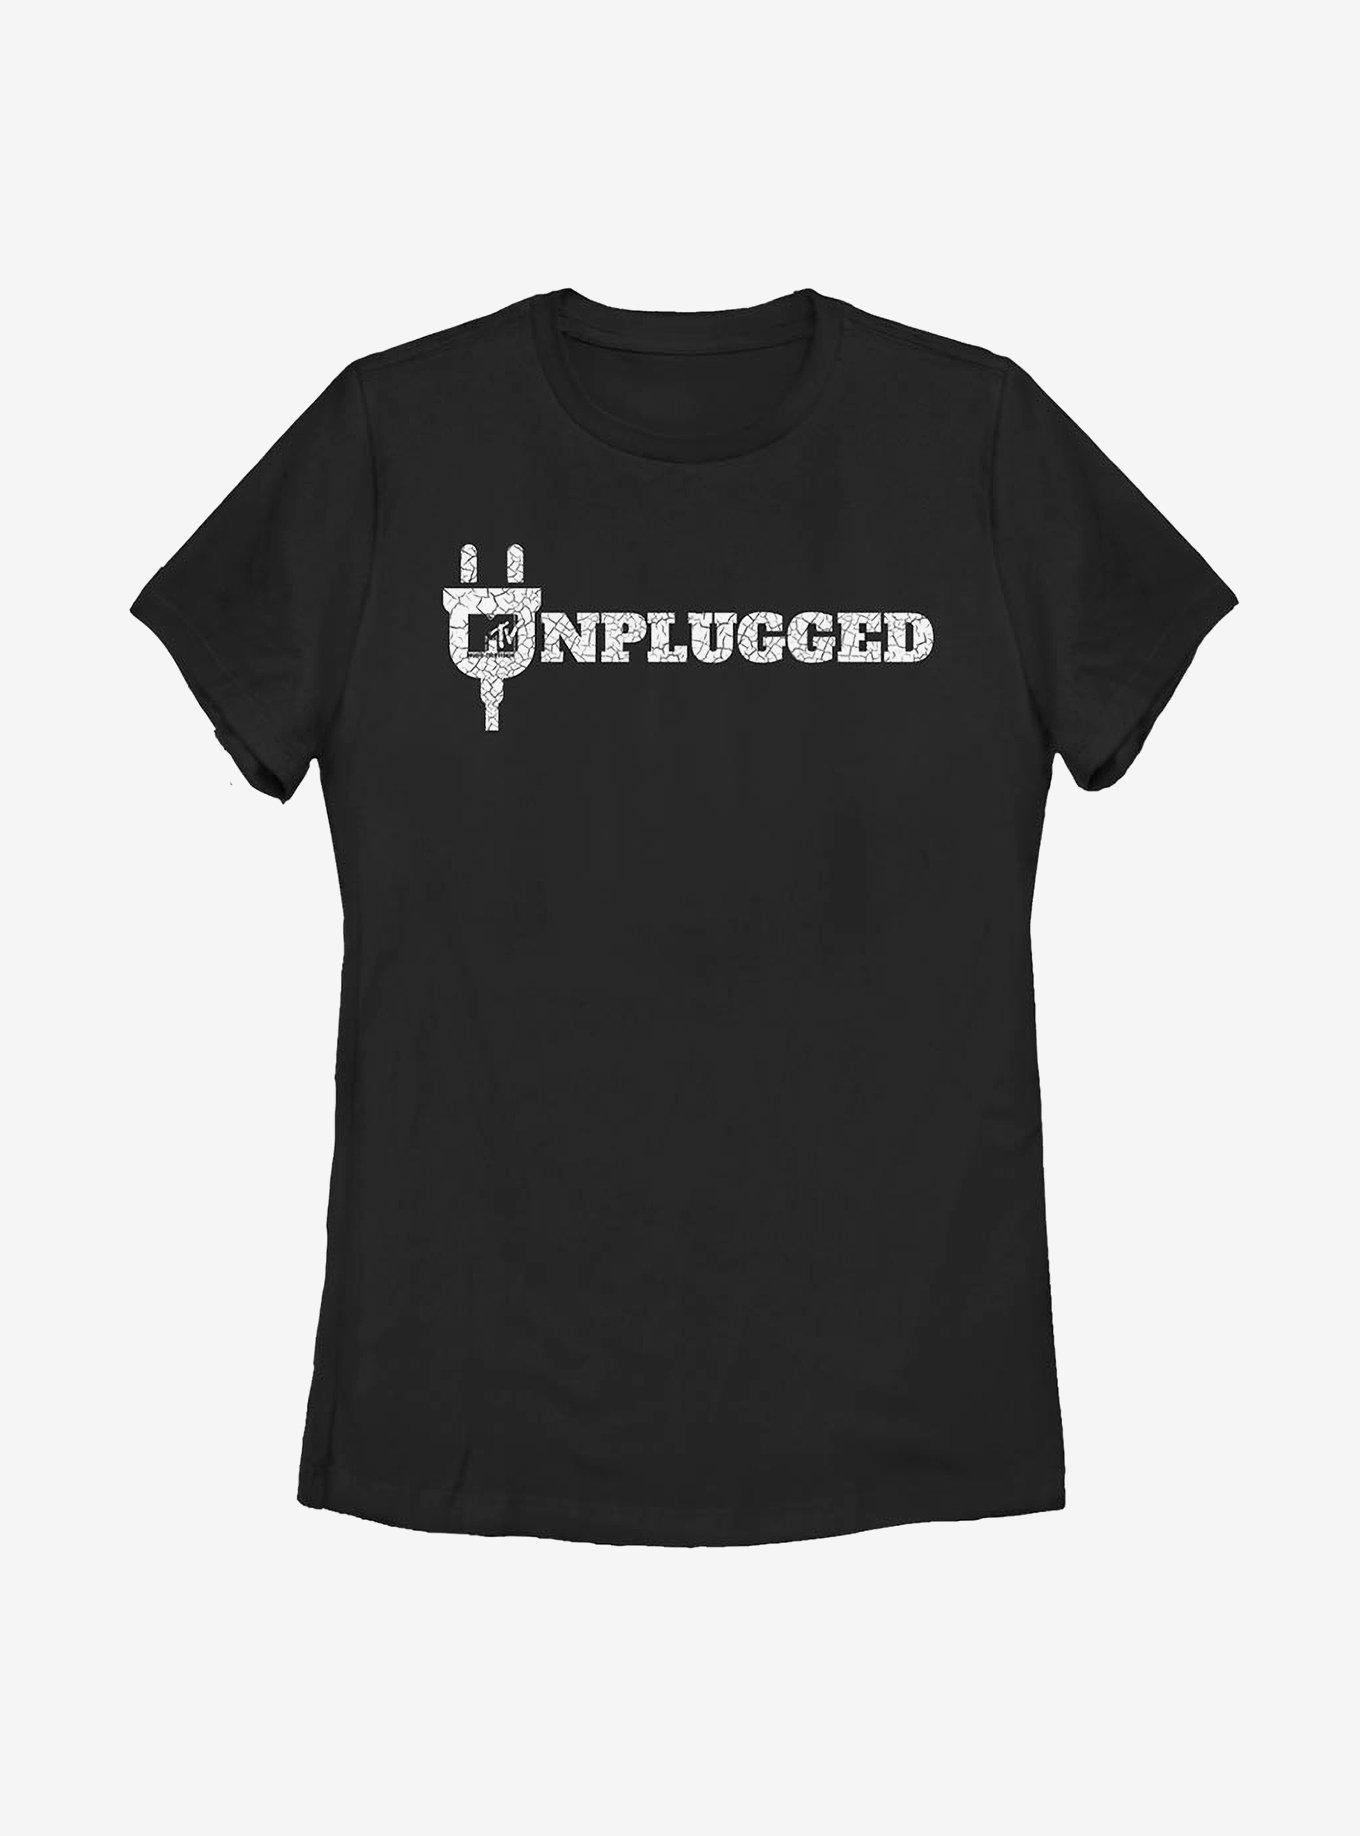 MTV Unplugged Crackle Womens T-Shirt, BLACK, hi-res